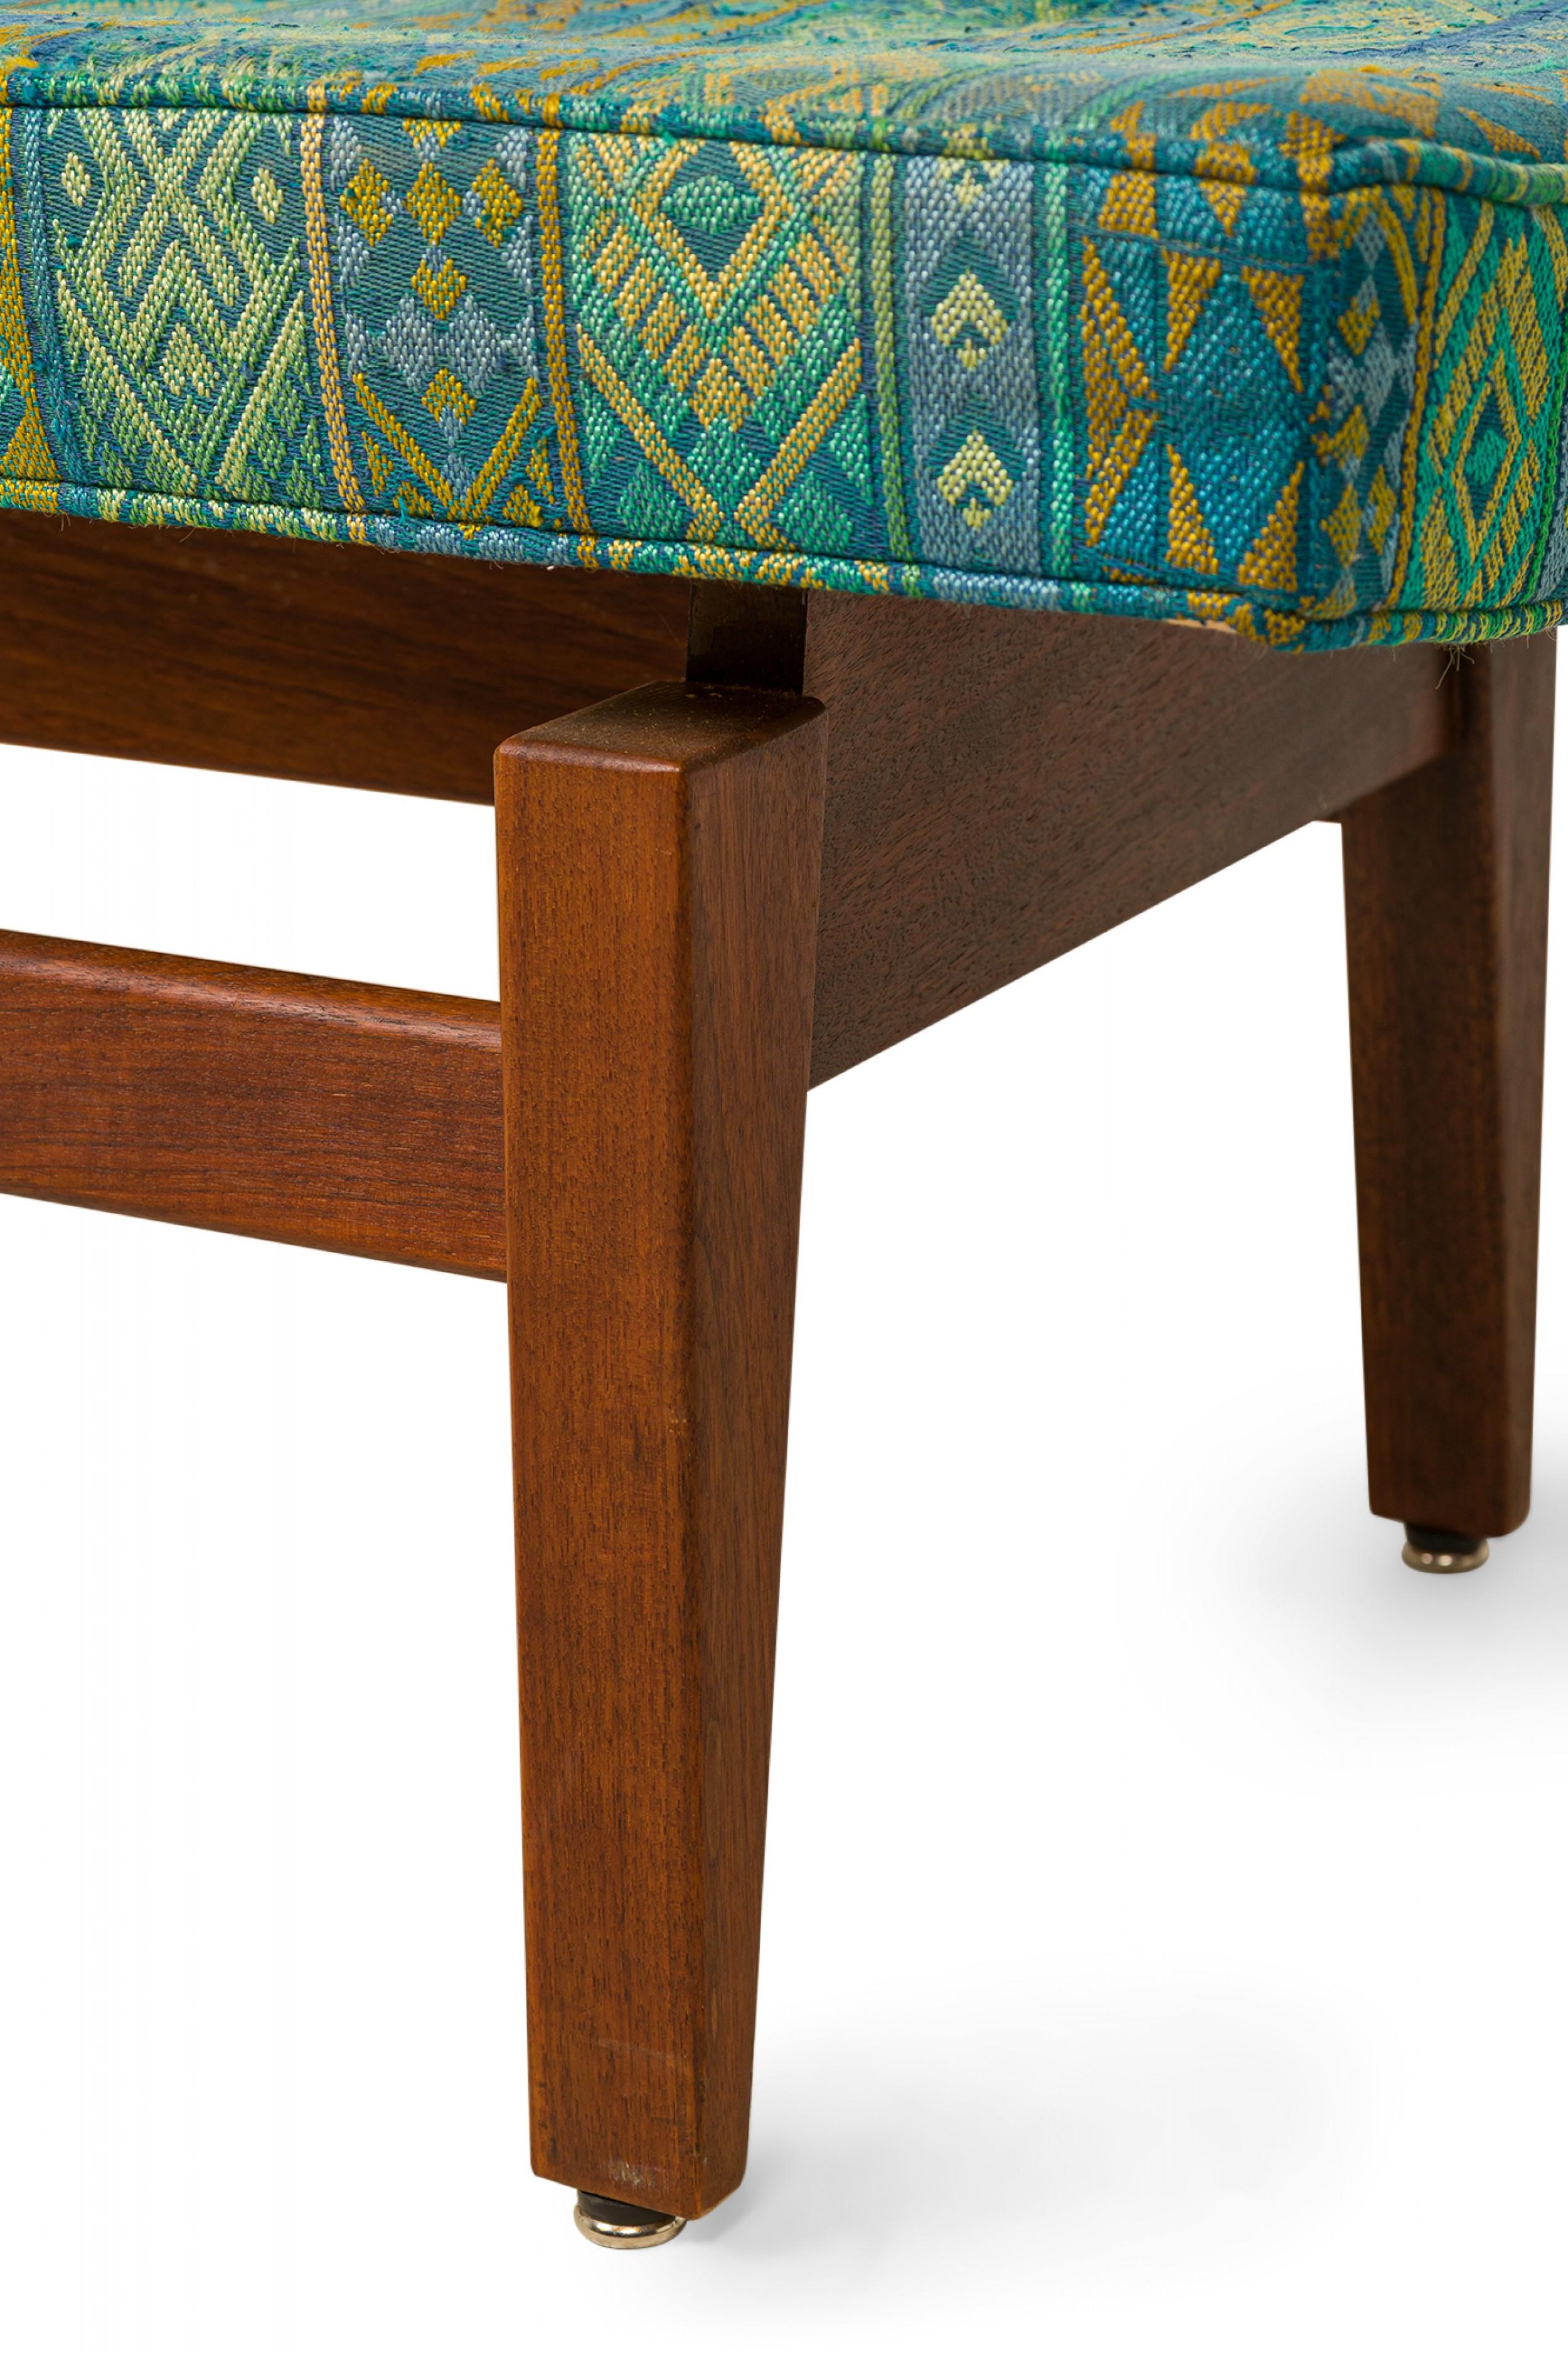 Jens Risom Danish Blue and Green Southwestern Pattern Upholstery For Sale 1